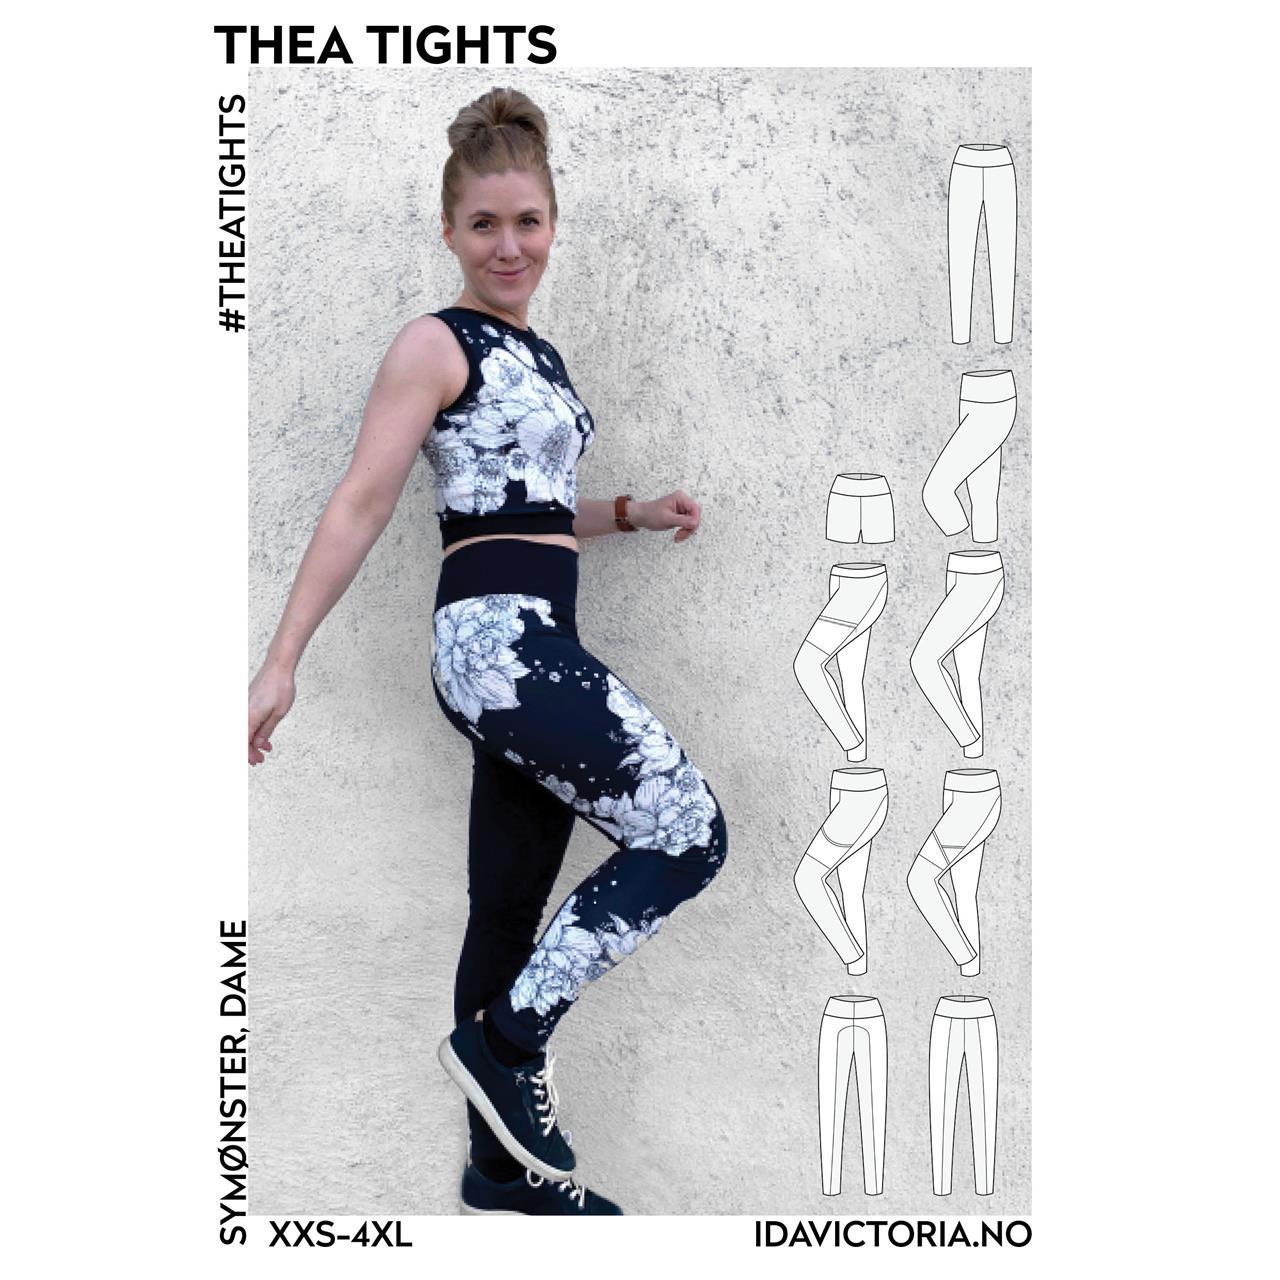 Ida Victoria: Thea tights